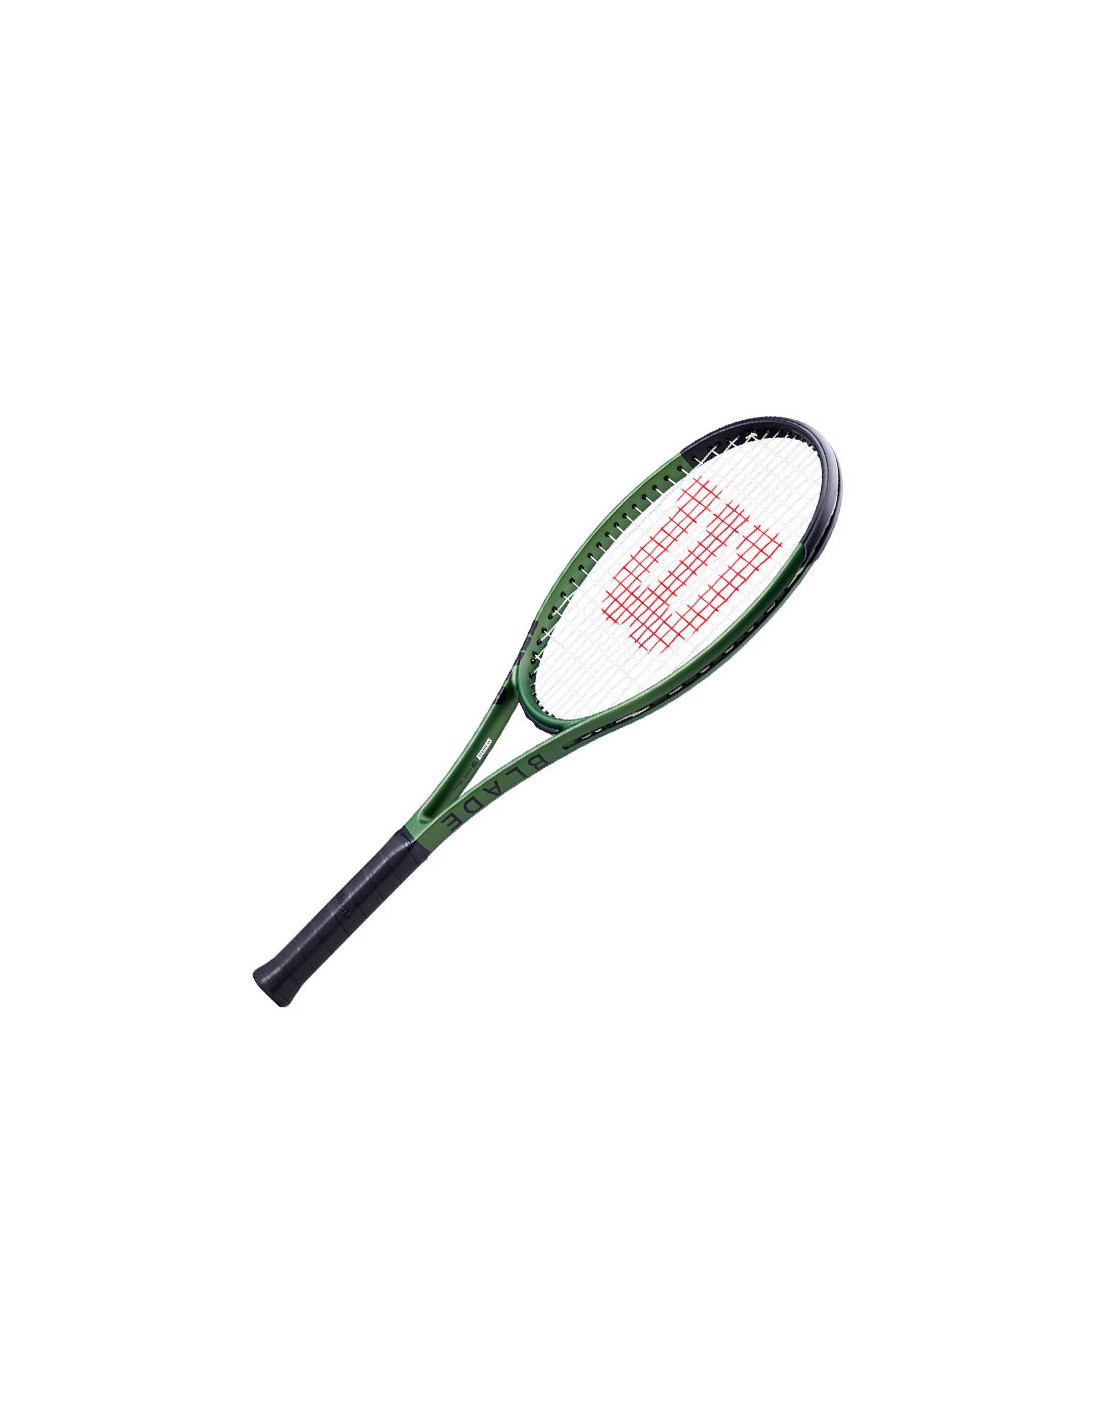 特別価格Wilson Blade 101L v8.0 Tennis Racket, Blade 101L v8.0, Carbon Fibre,  Head-Light (Grip-Heavy) Balance, 290 g, 68.6 cm Length並行輸入 通販 